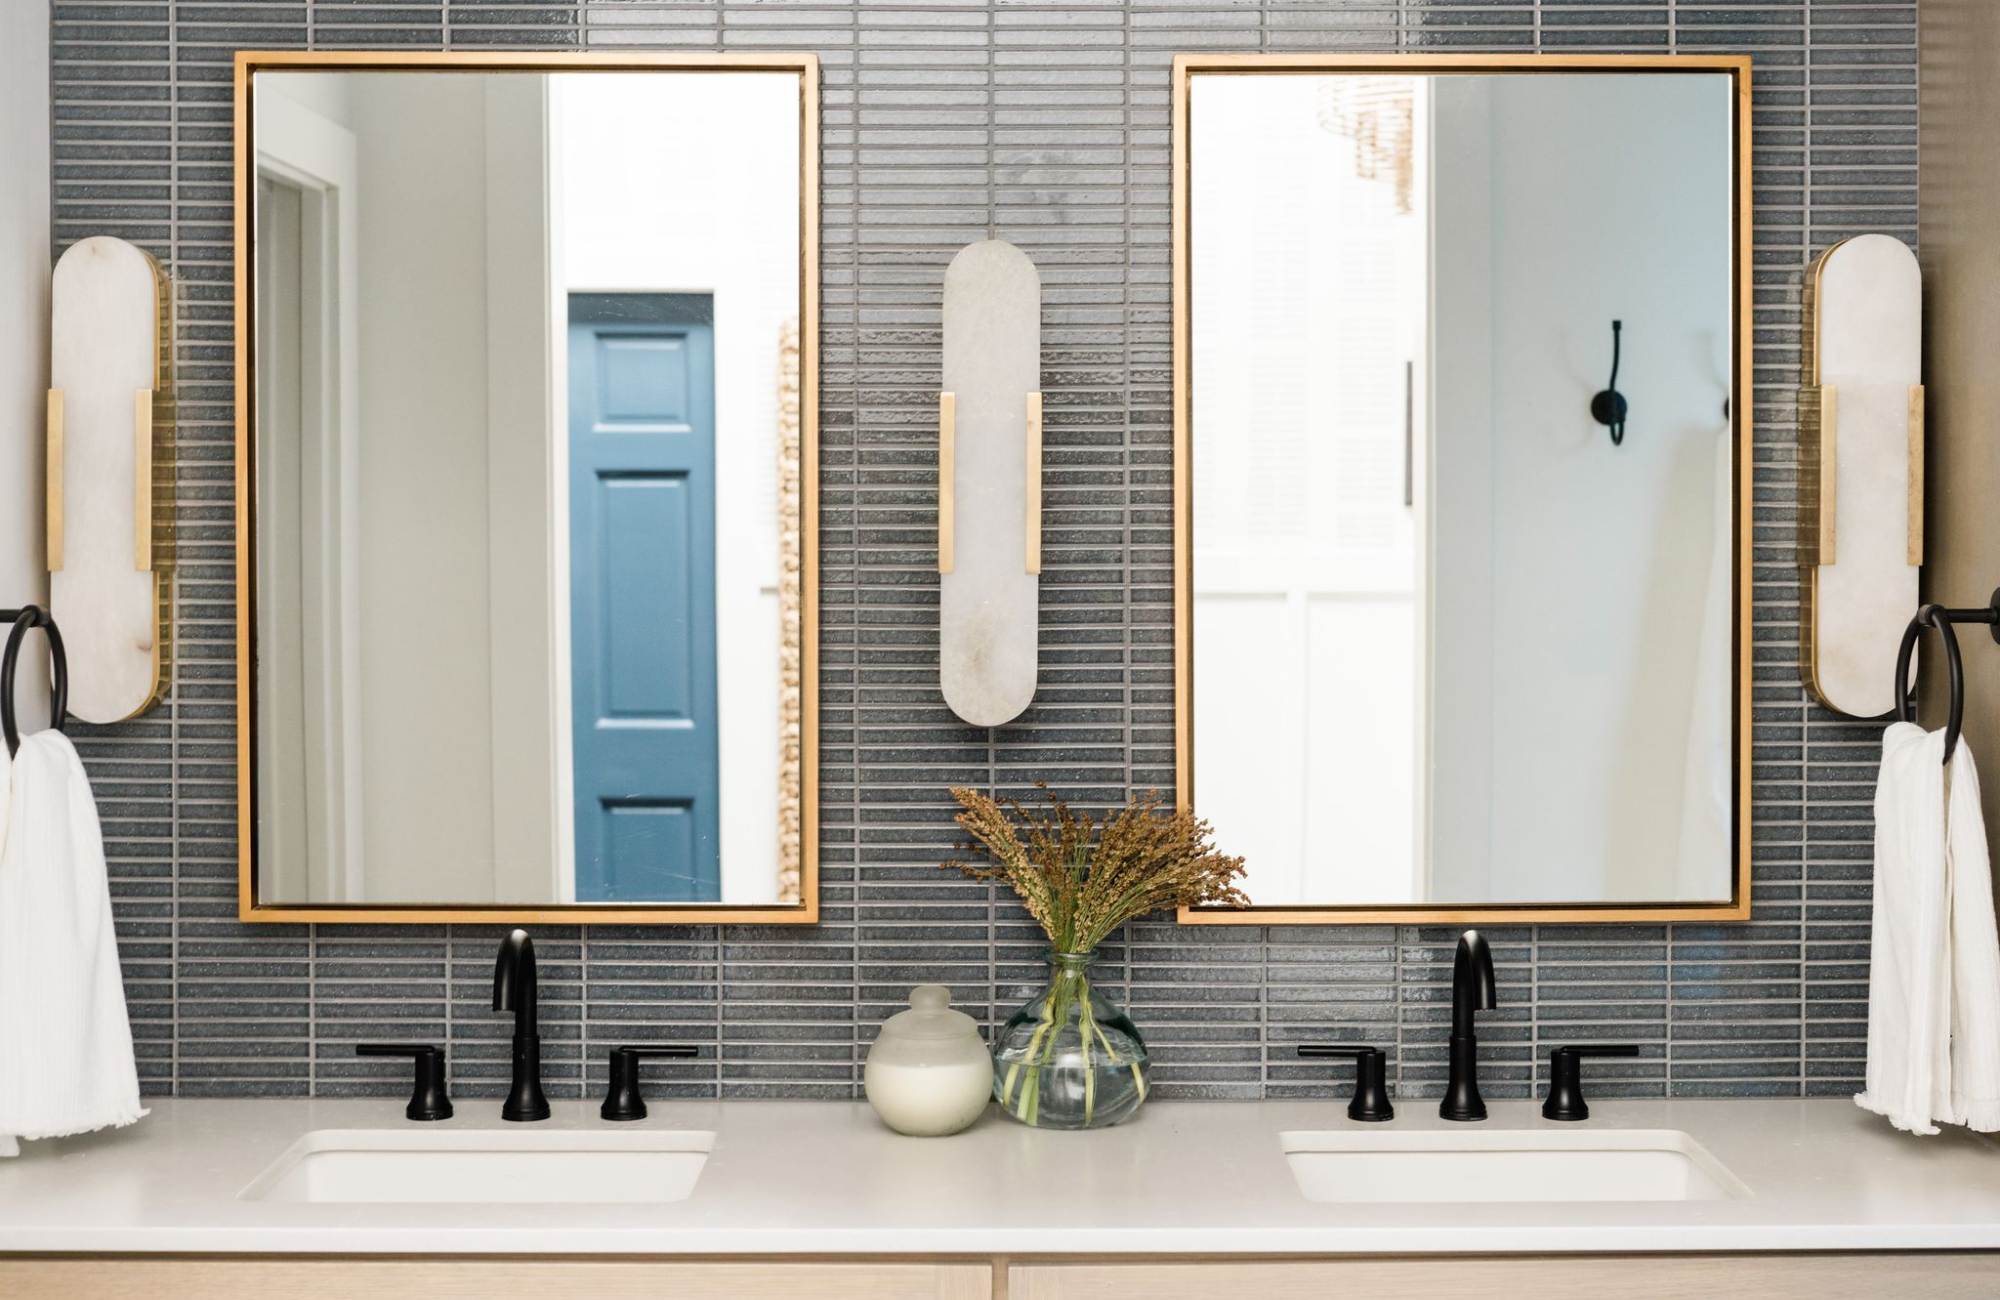 alamo heights custom vanity blue horizontal tile designer lighting brass and black hardware styleberry interior design